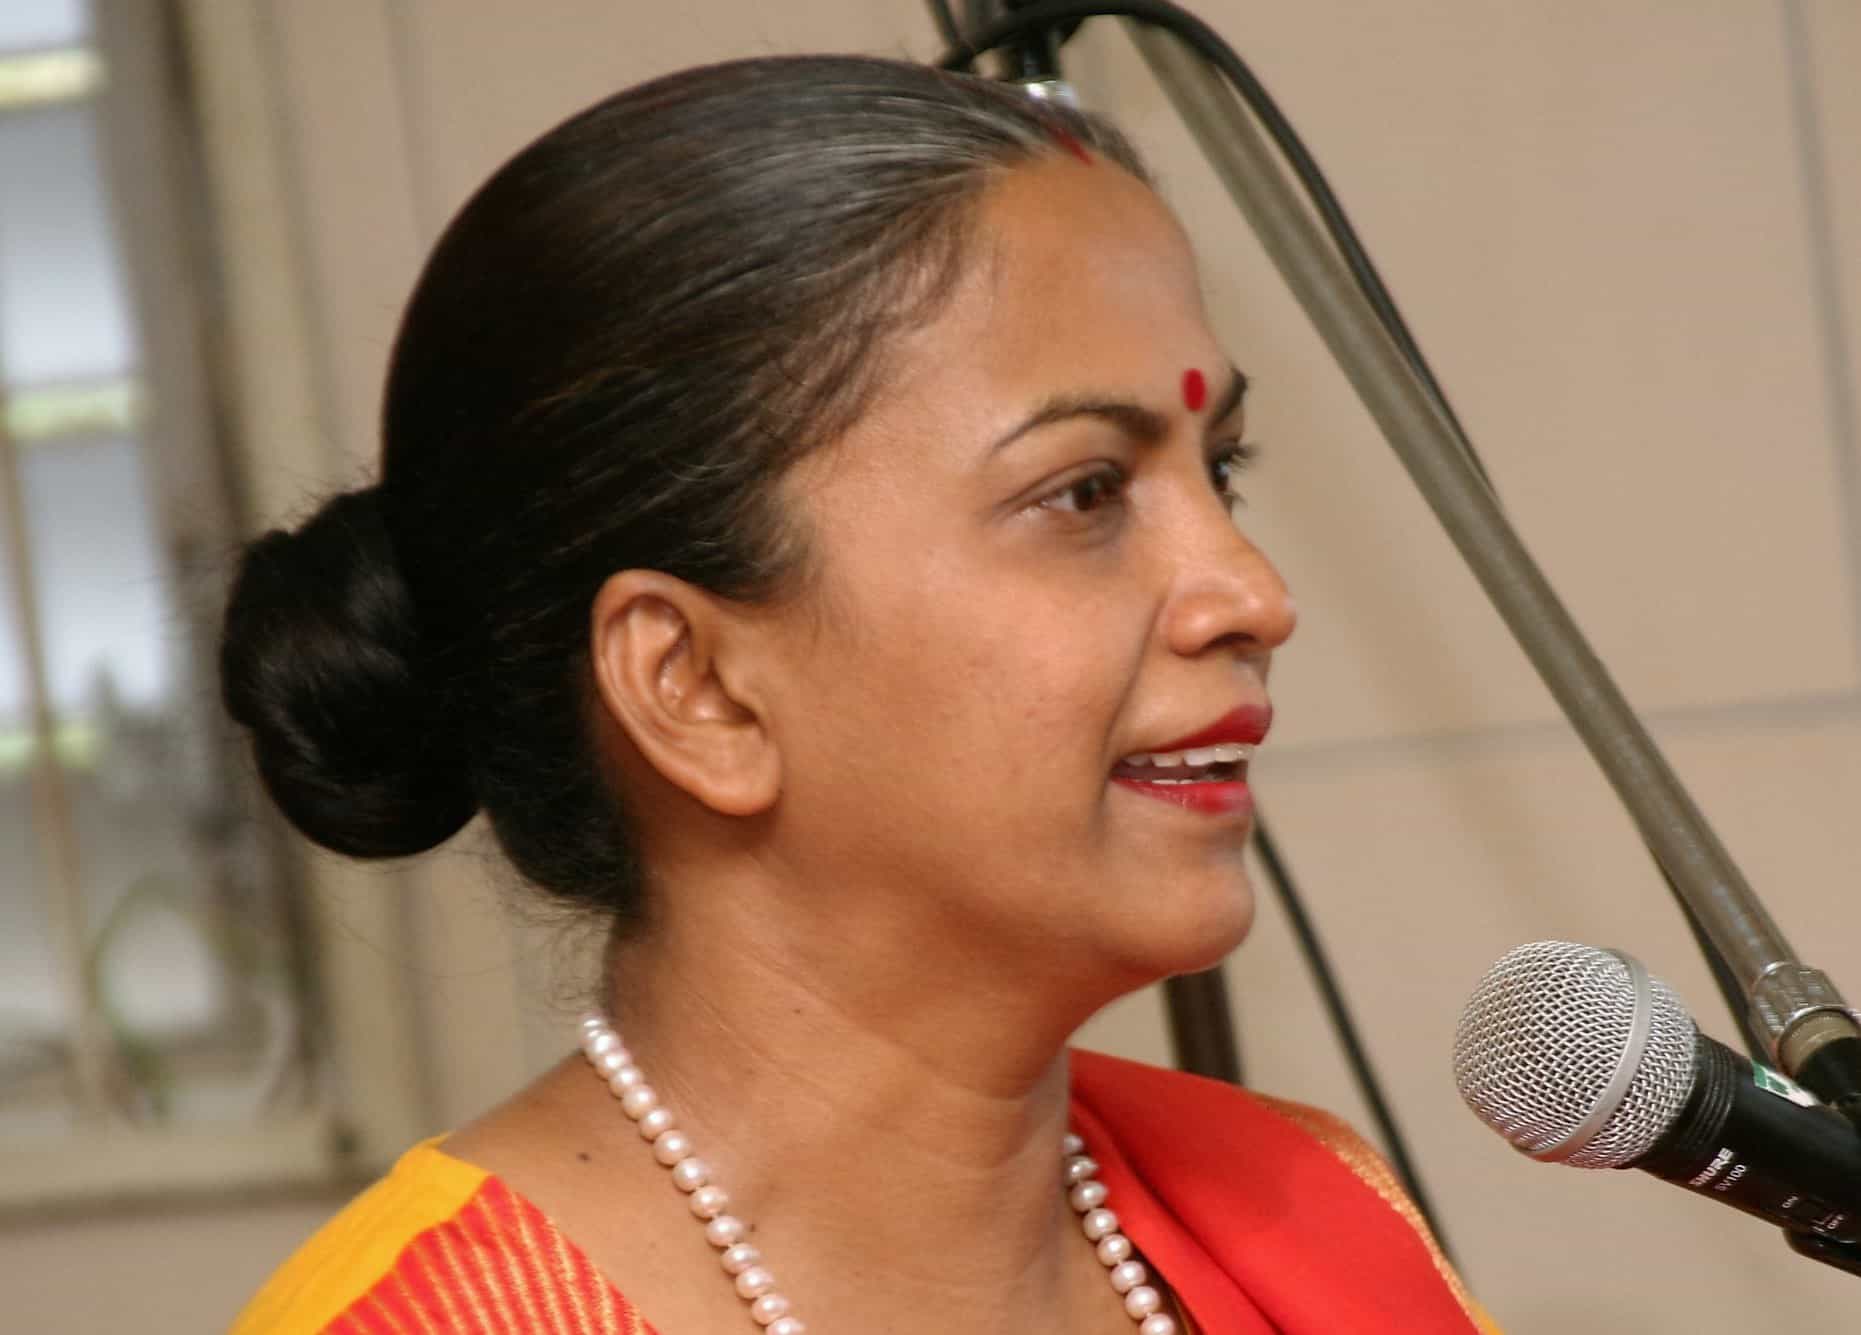 Geeta Ramsingh